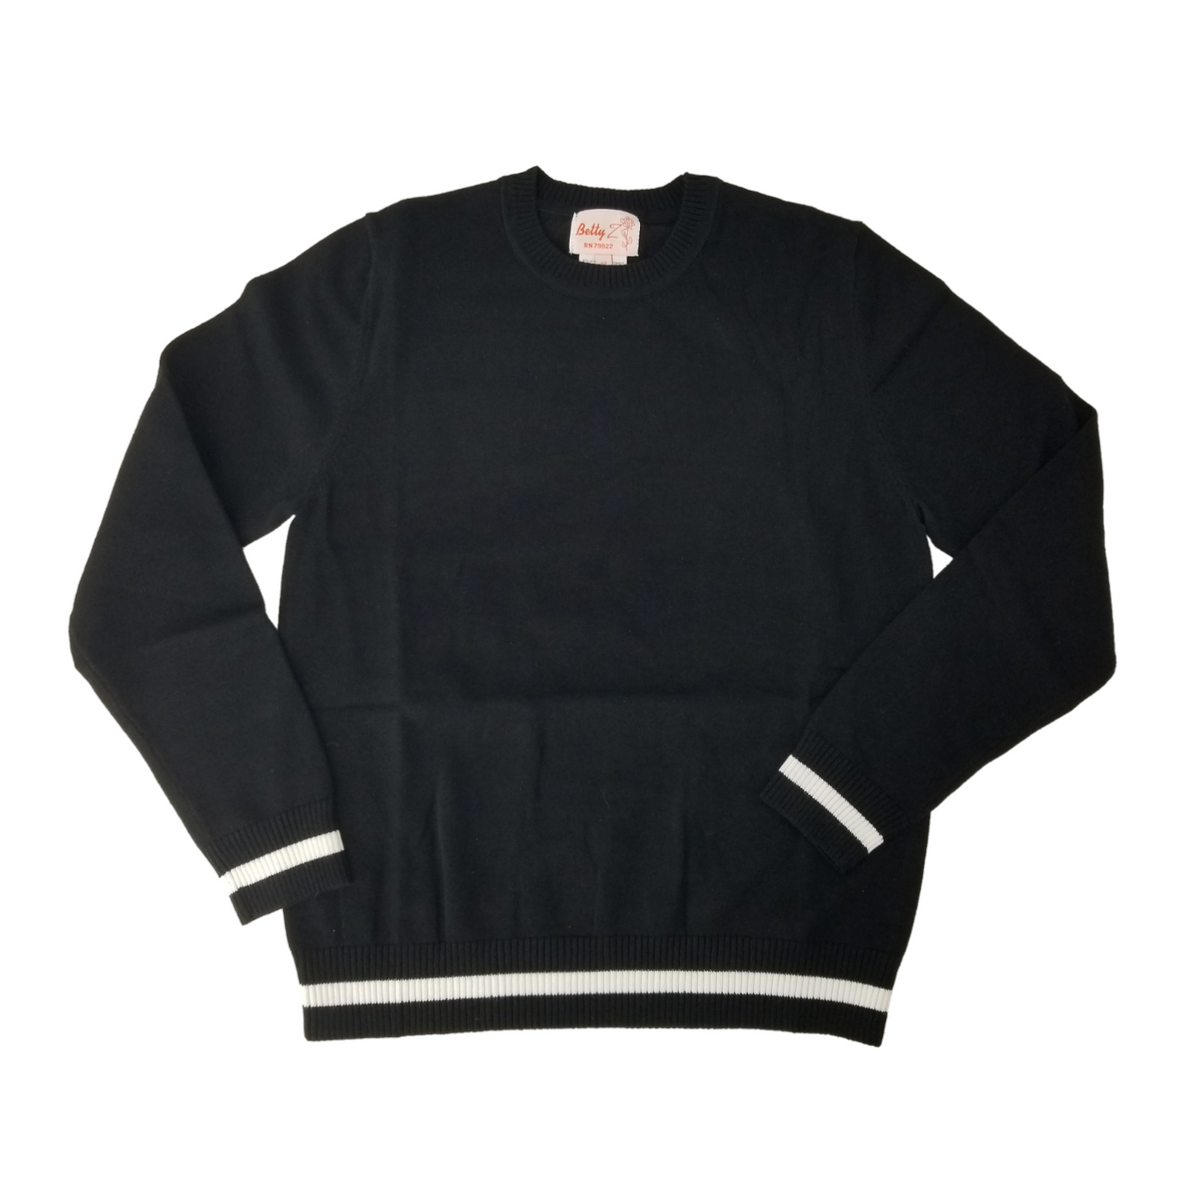 Cotton Crew Neck Sweater Black - 102CPW white trim